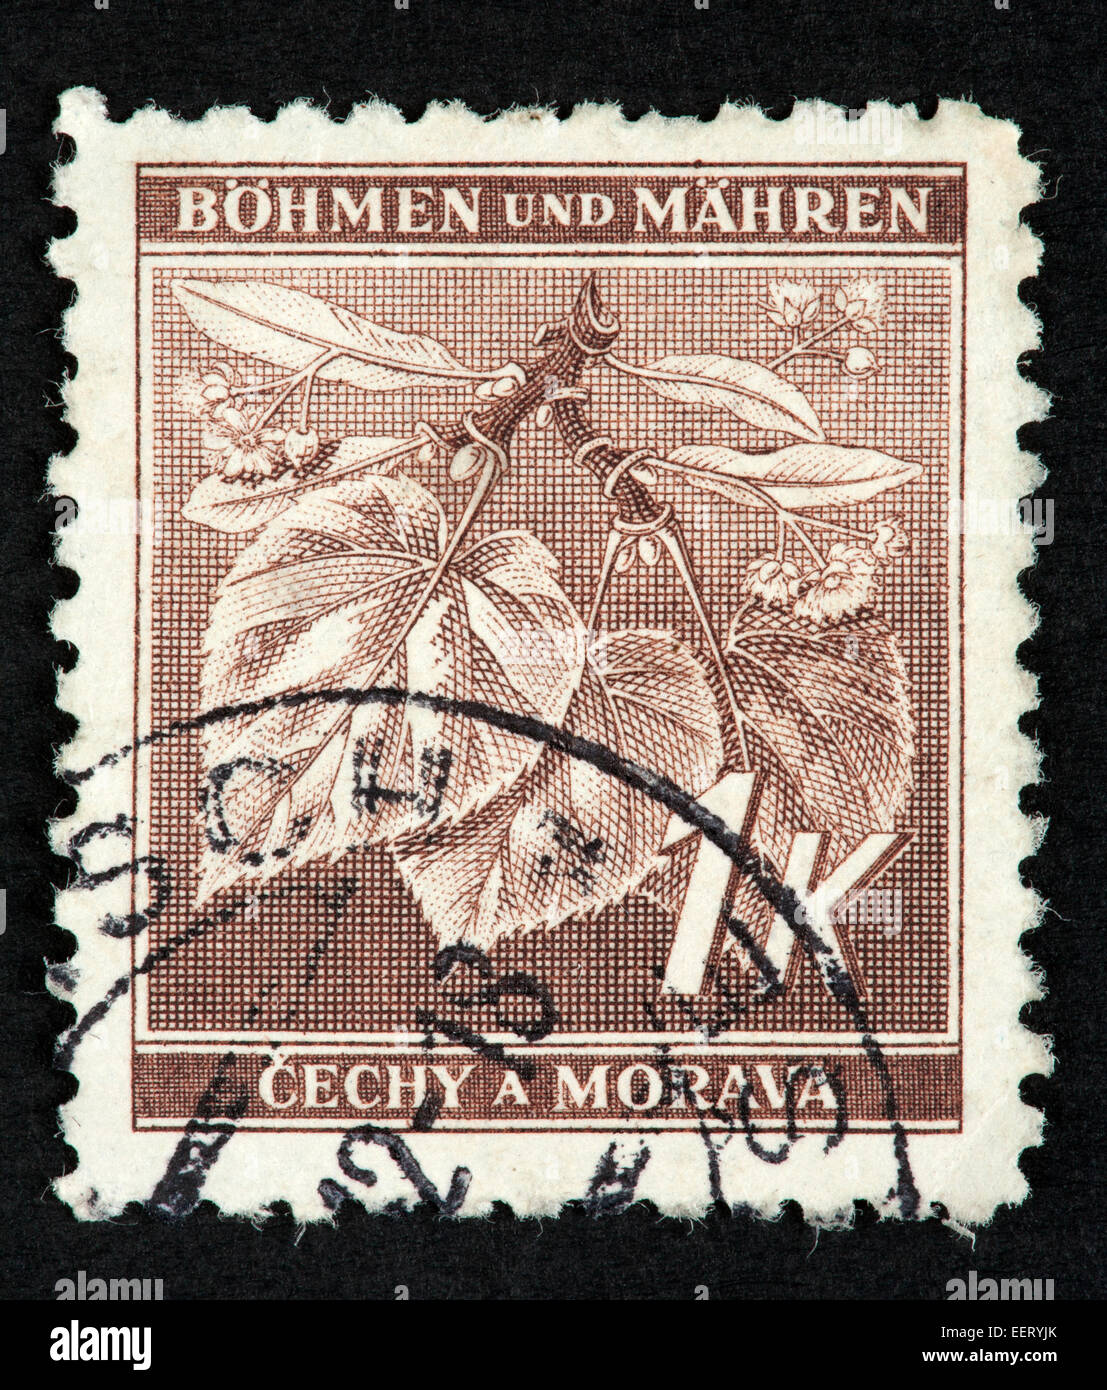 Protectorate of Bohemia and Moravia postage stamp Stock Photo